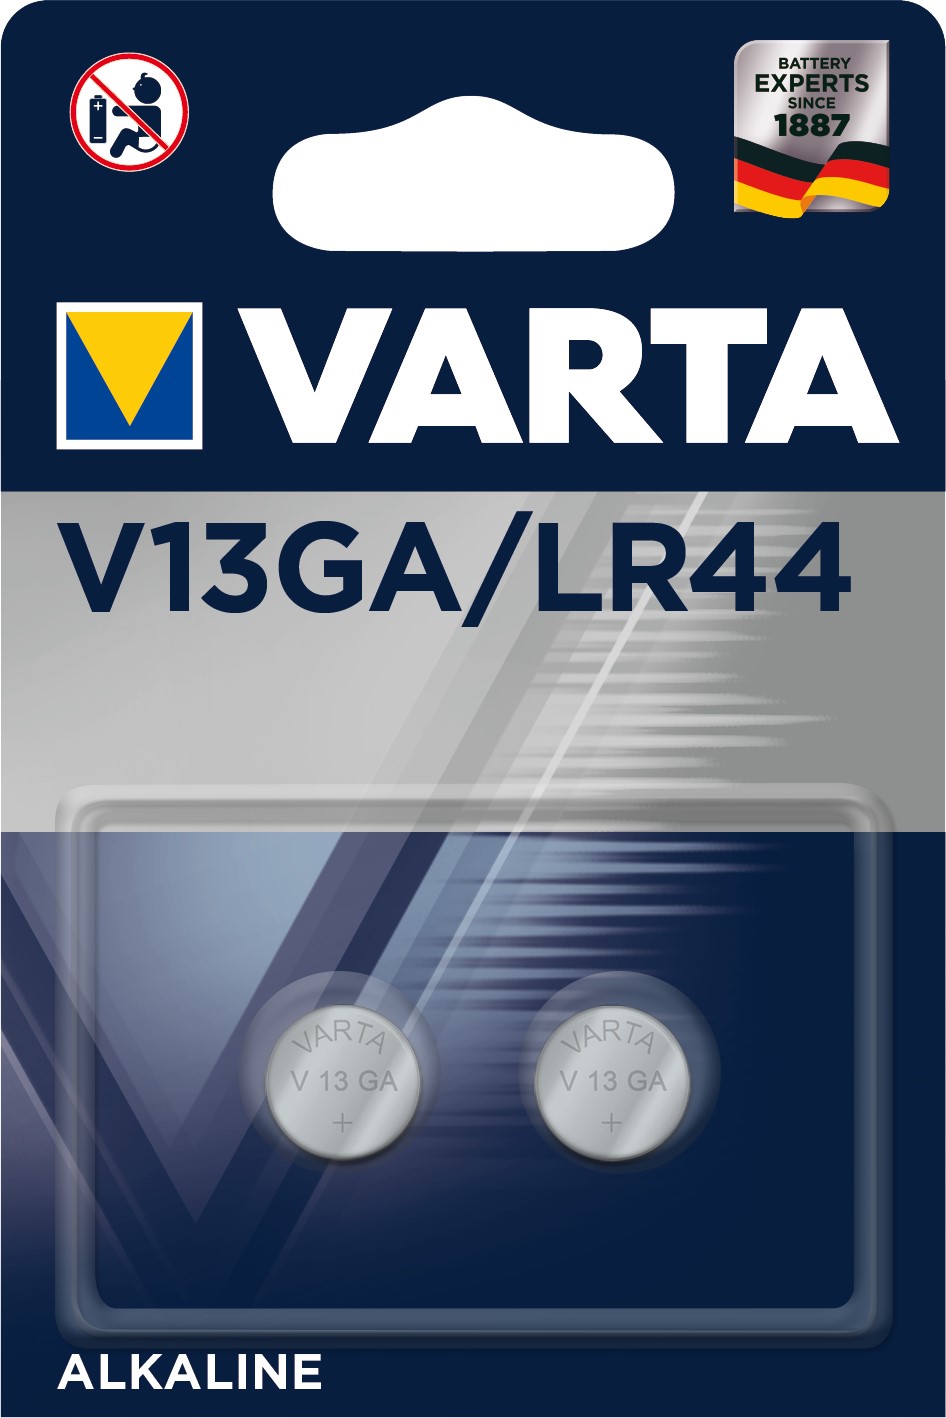 VARTA LR44/V13GA x2 Pile alcaline 1,5V VARTA